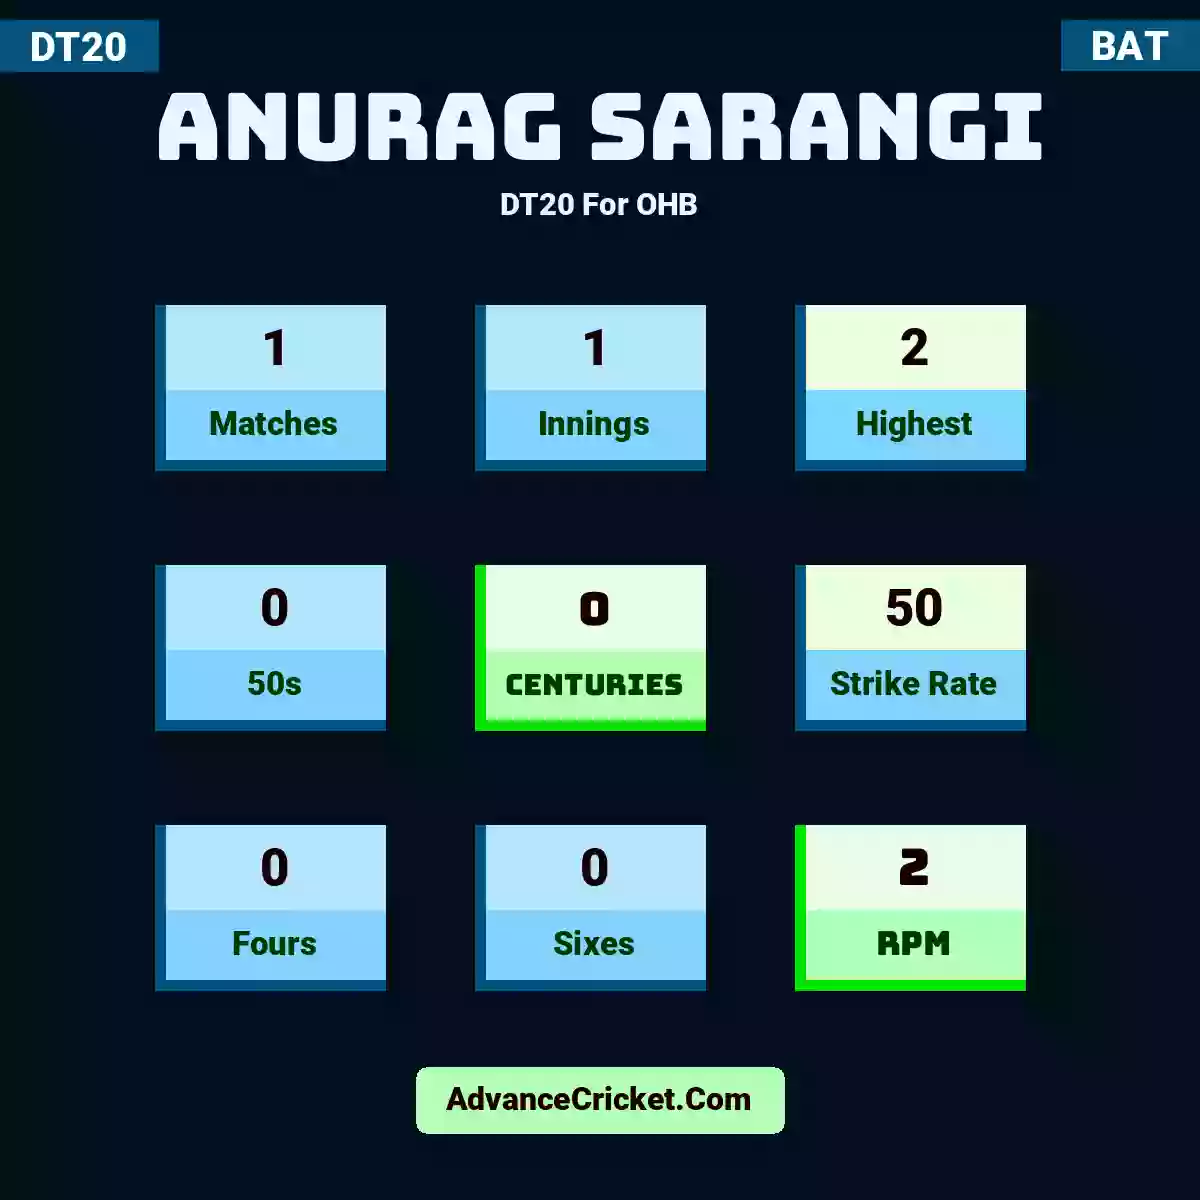 Anurag Sarangi DT20  For OHB, Anurag Sarangi played 1 matches, scored 2 runs as highest, 0 half-centuries, and 0 centuries, with a strike rate of 50. A.Sarangi hit 0 fours and 0 sixes, with an RPM of 2.